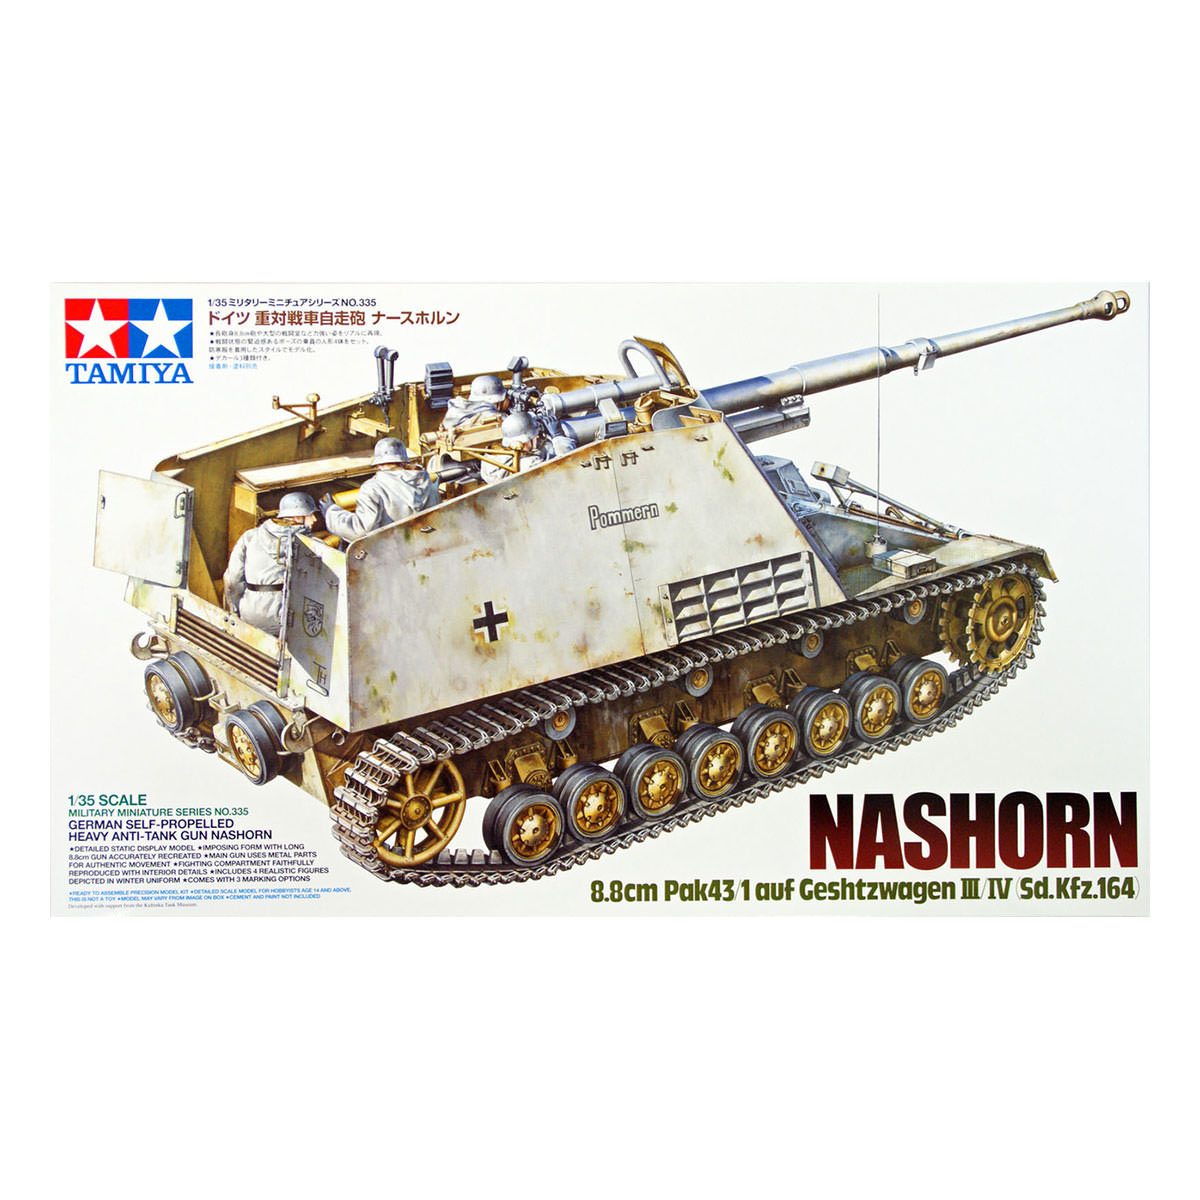 Tamiya 1/35 Nashorn - The Tank Museum